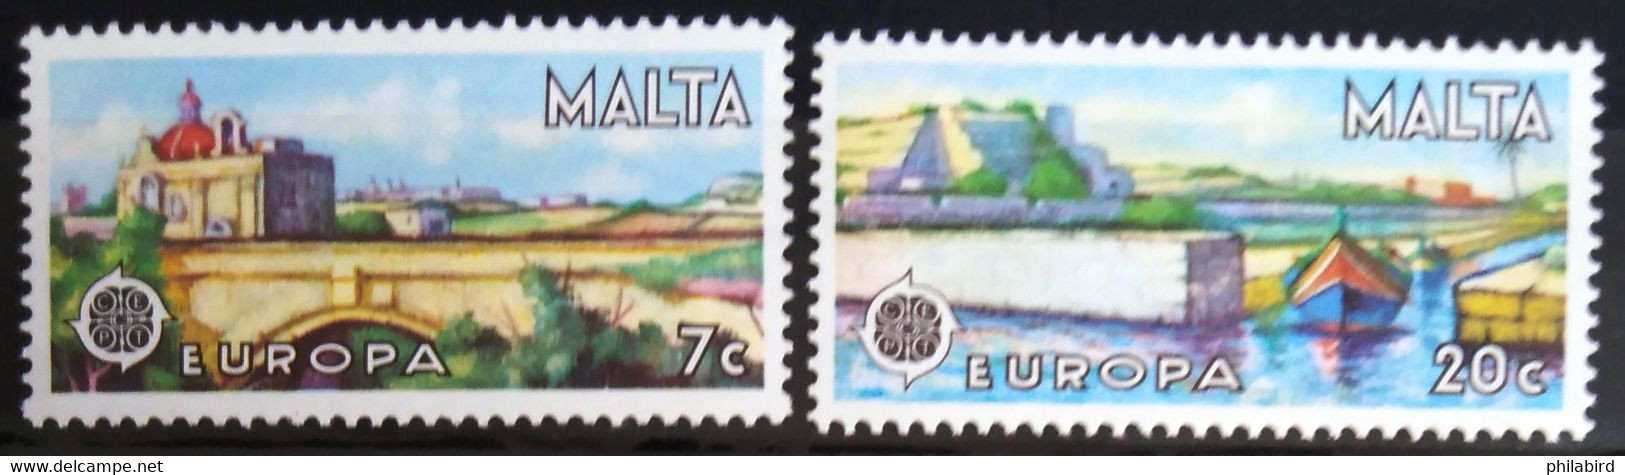 EUROPA 1977 - MALTE                    N° 549/550                        NEUF* - 1977